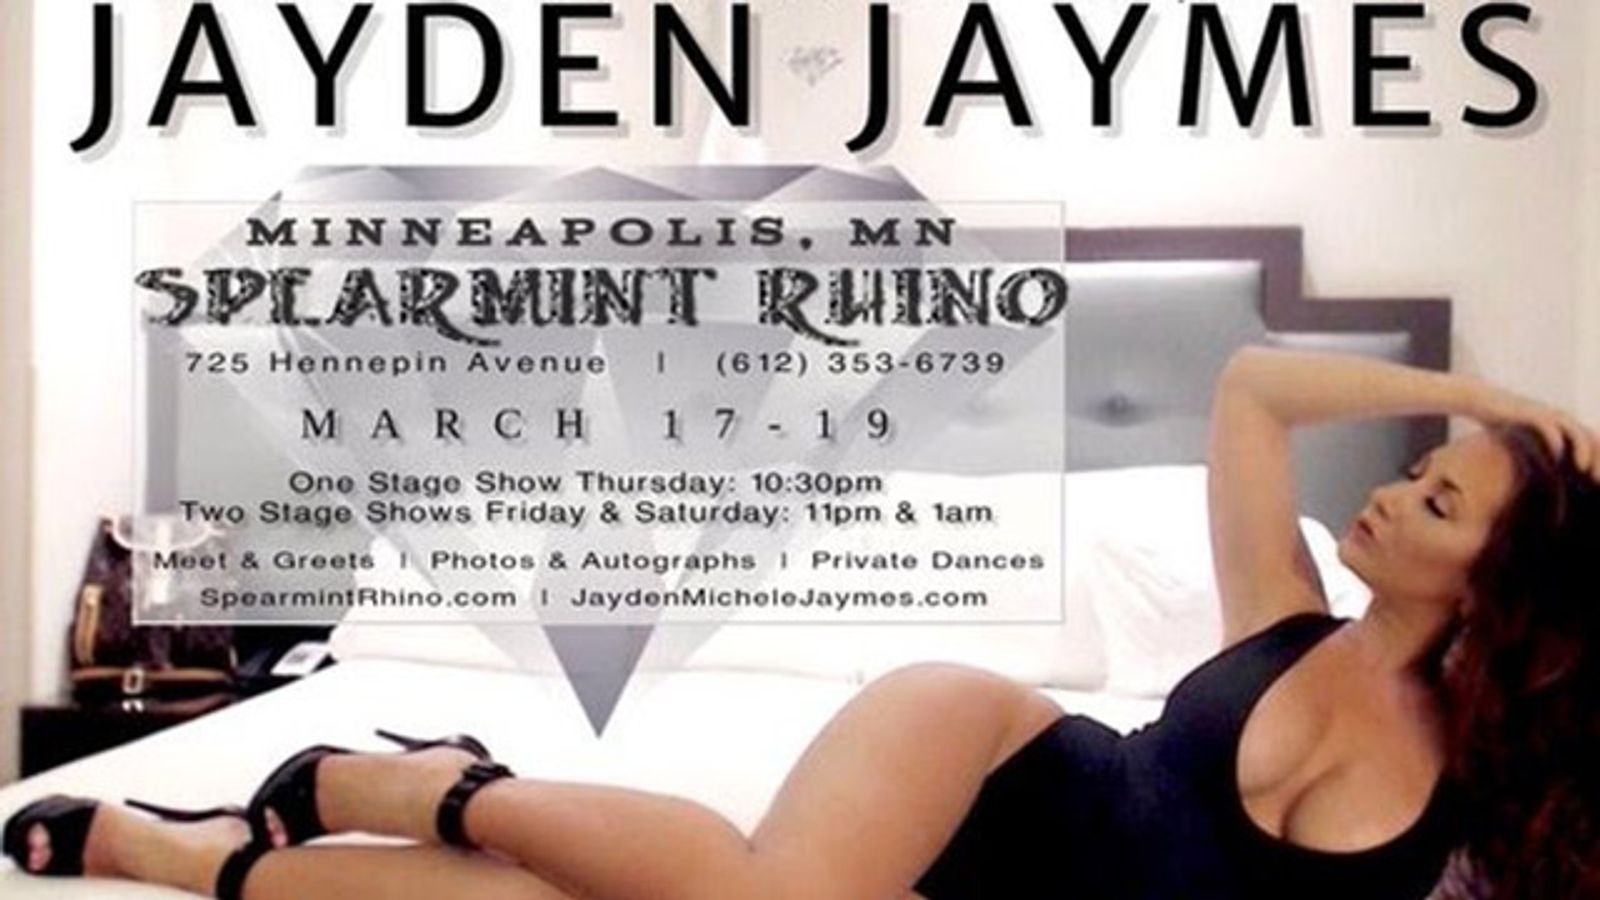 Jayden Jaymes To Feature at Spearmint Rhino Minneapolis